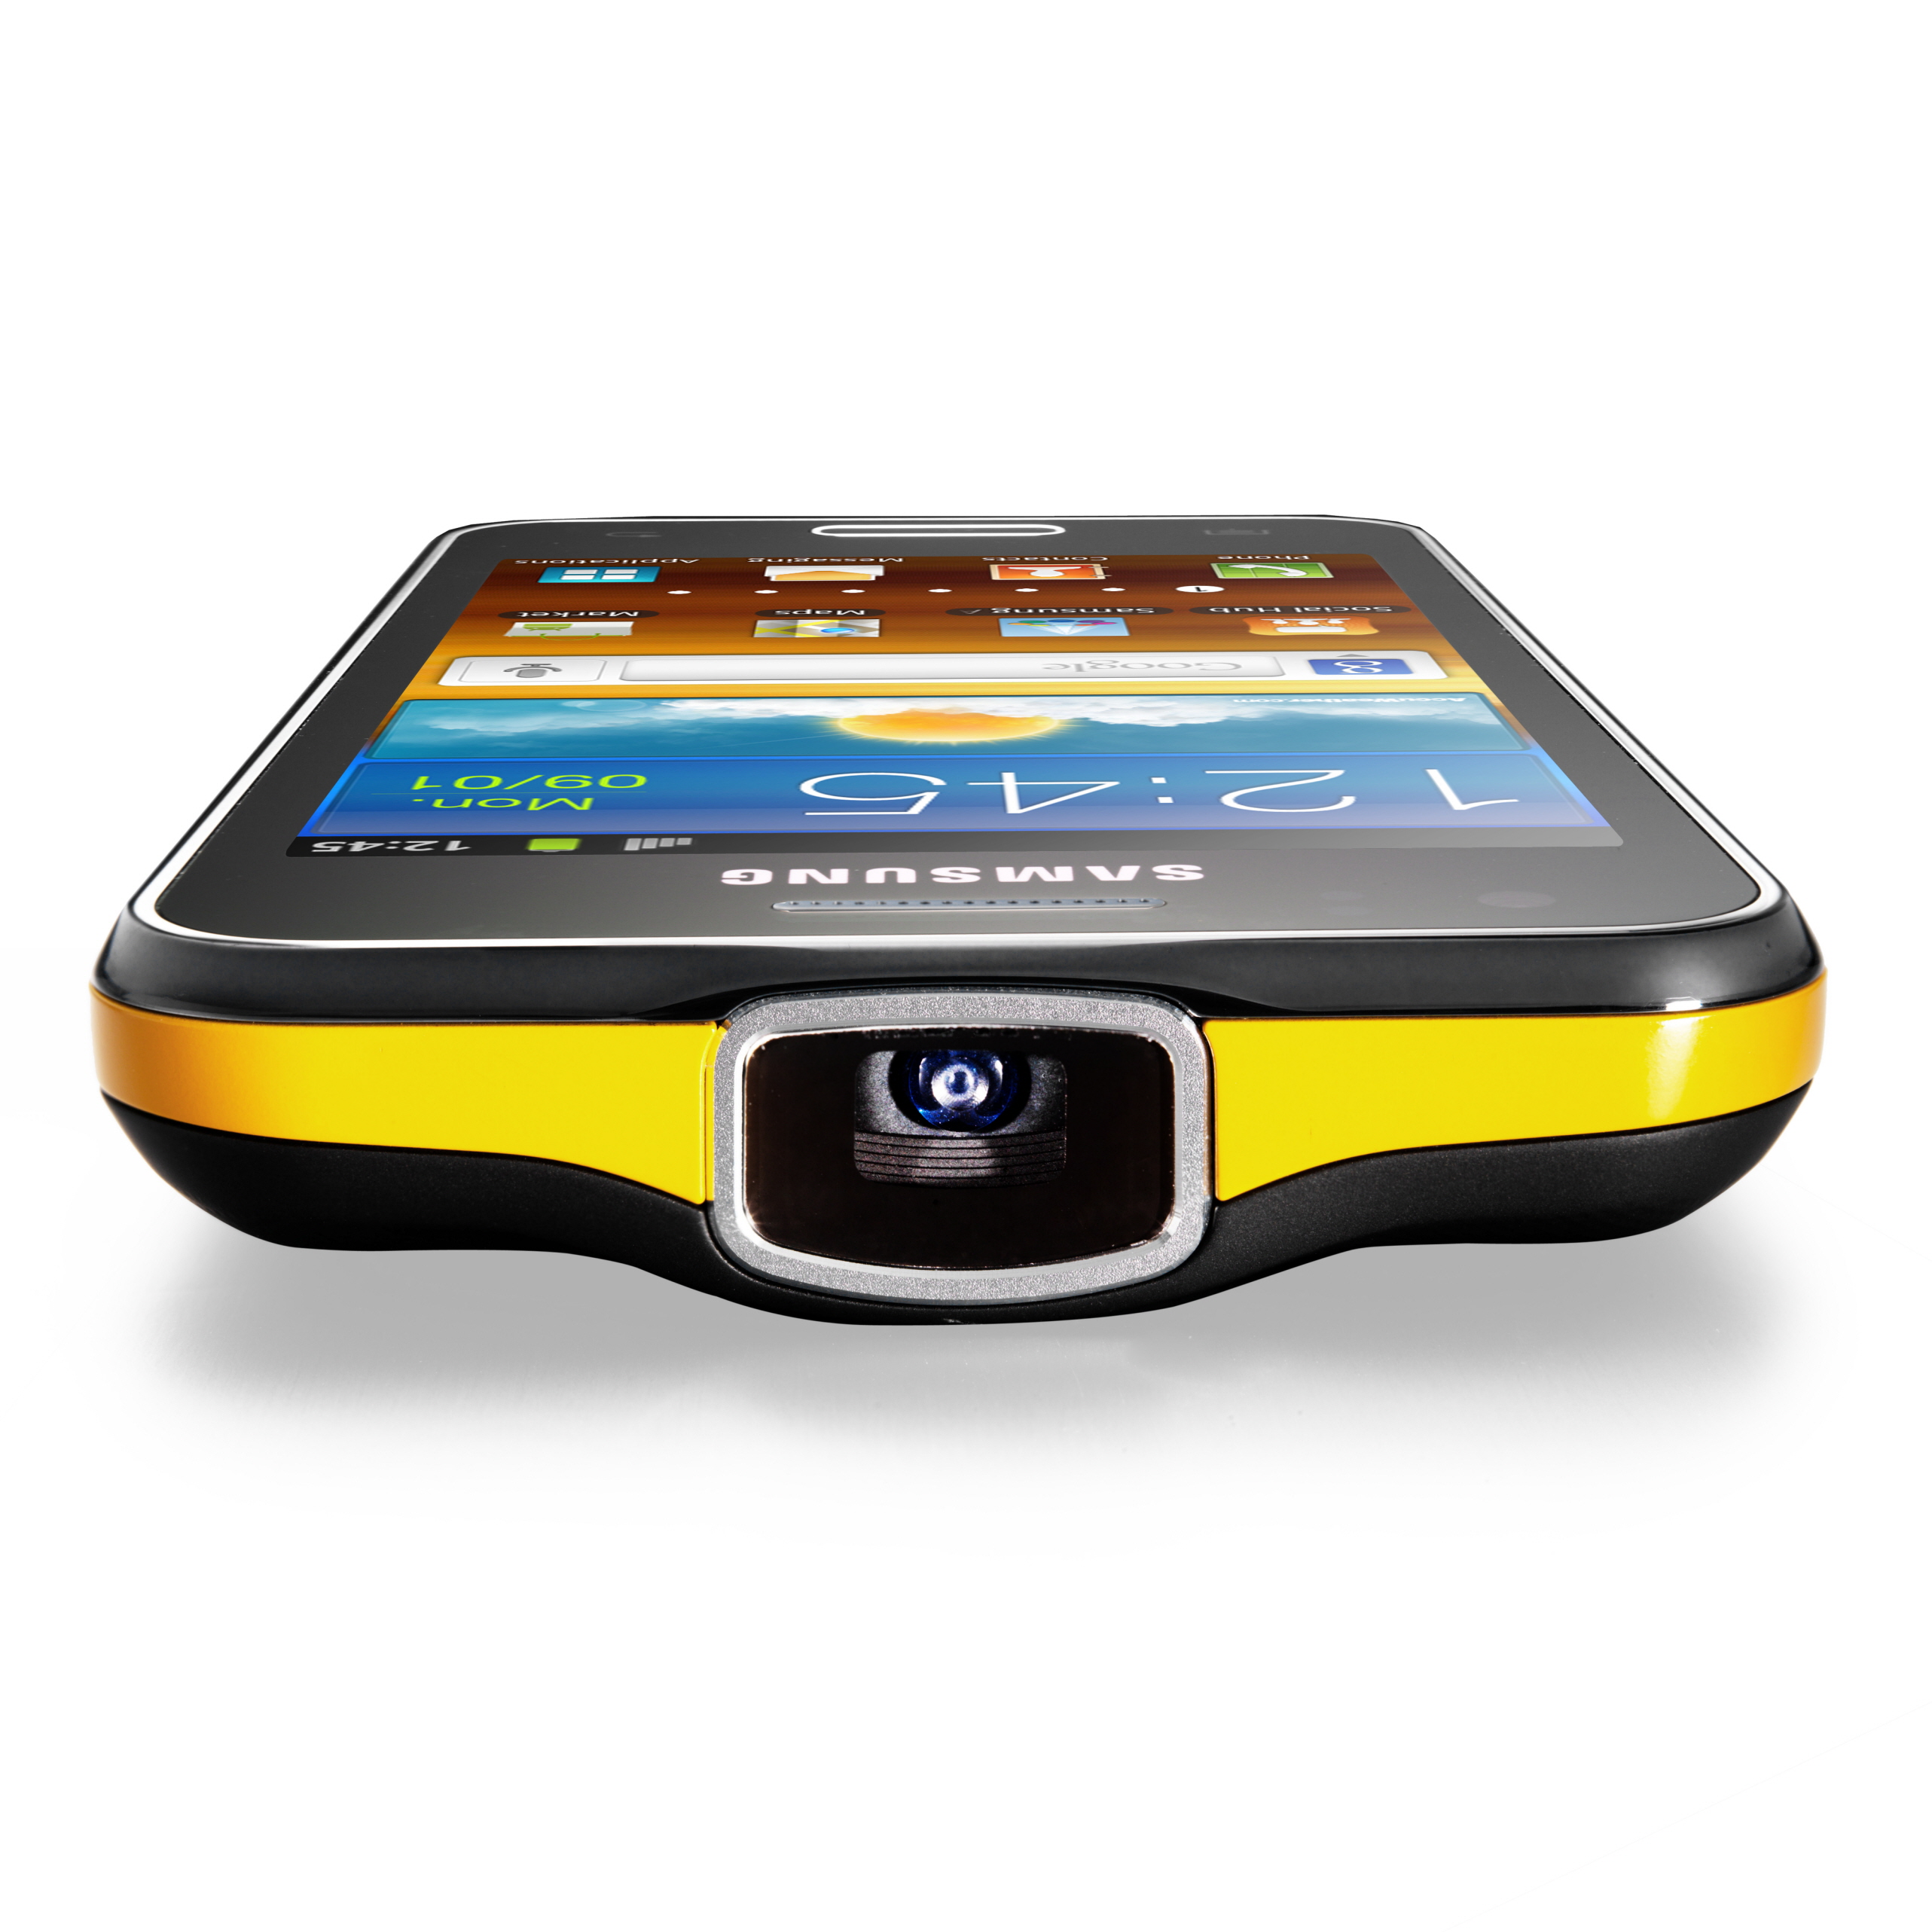 Проектор на камеру телефона. Samsung Galaxy Beam i8530. Смартфон Samsung Galaxy Beam gt-i8530. Samsung Galaxy Beam 4. Samsung Galaxy Beam 2.